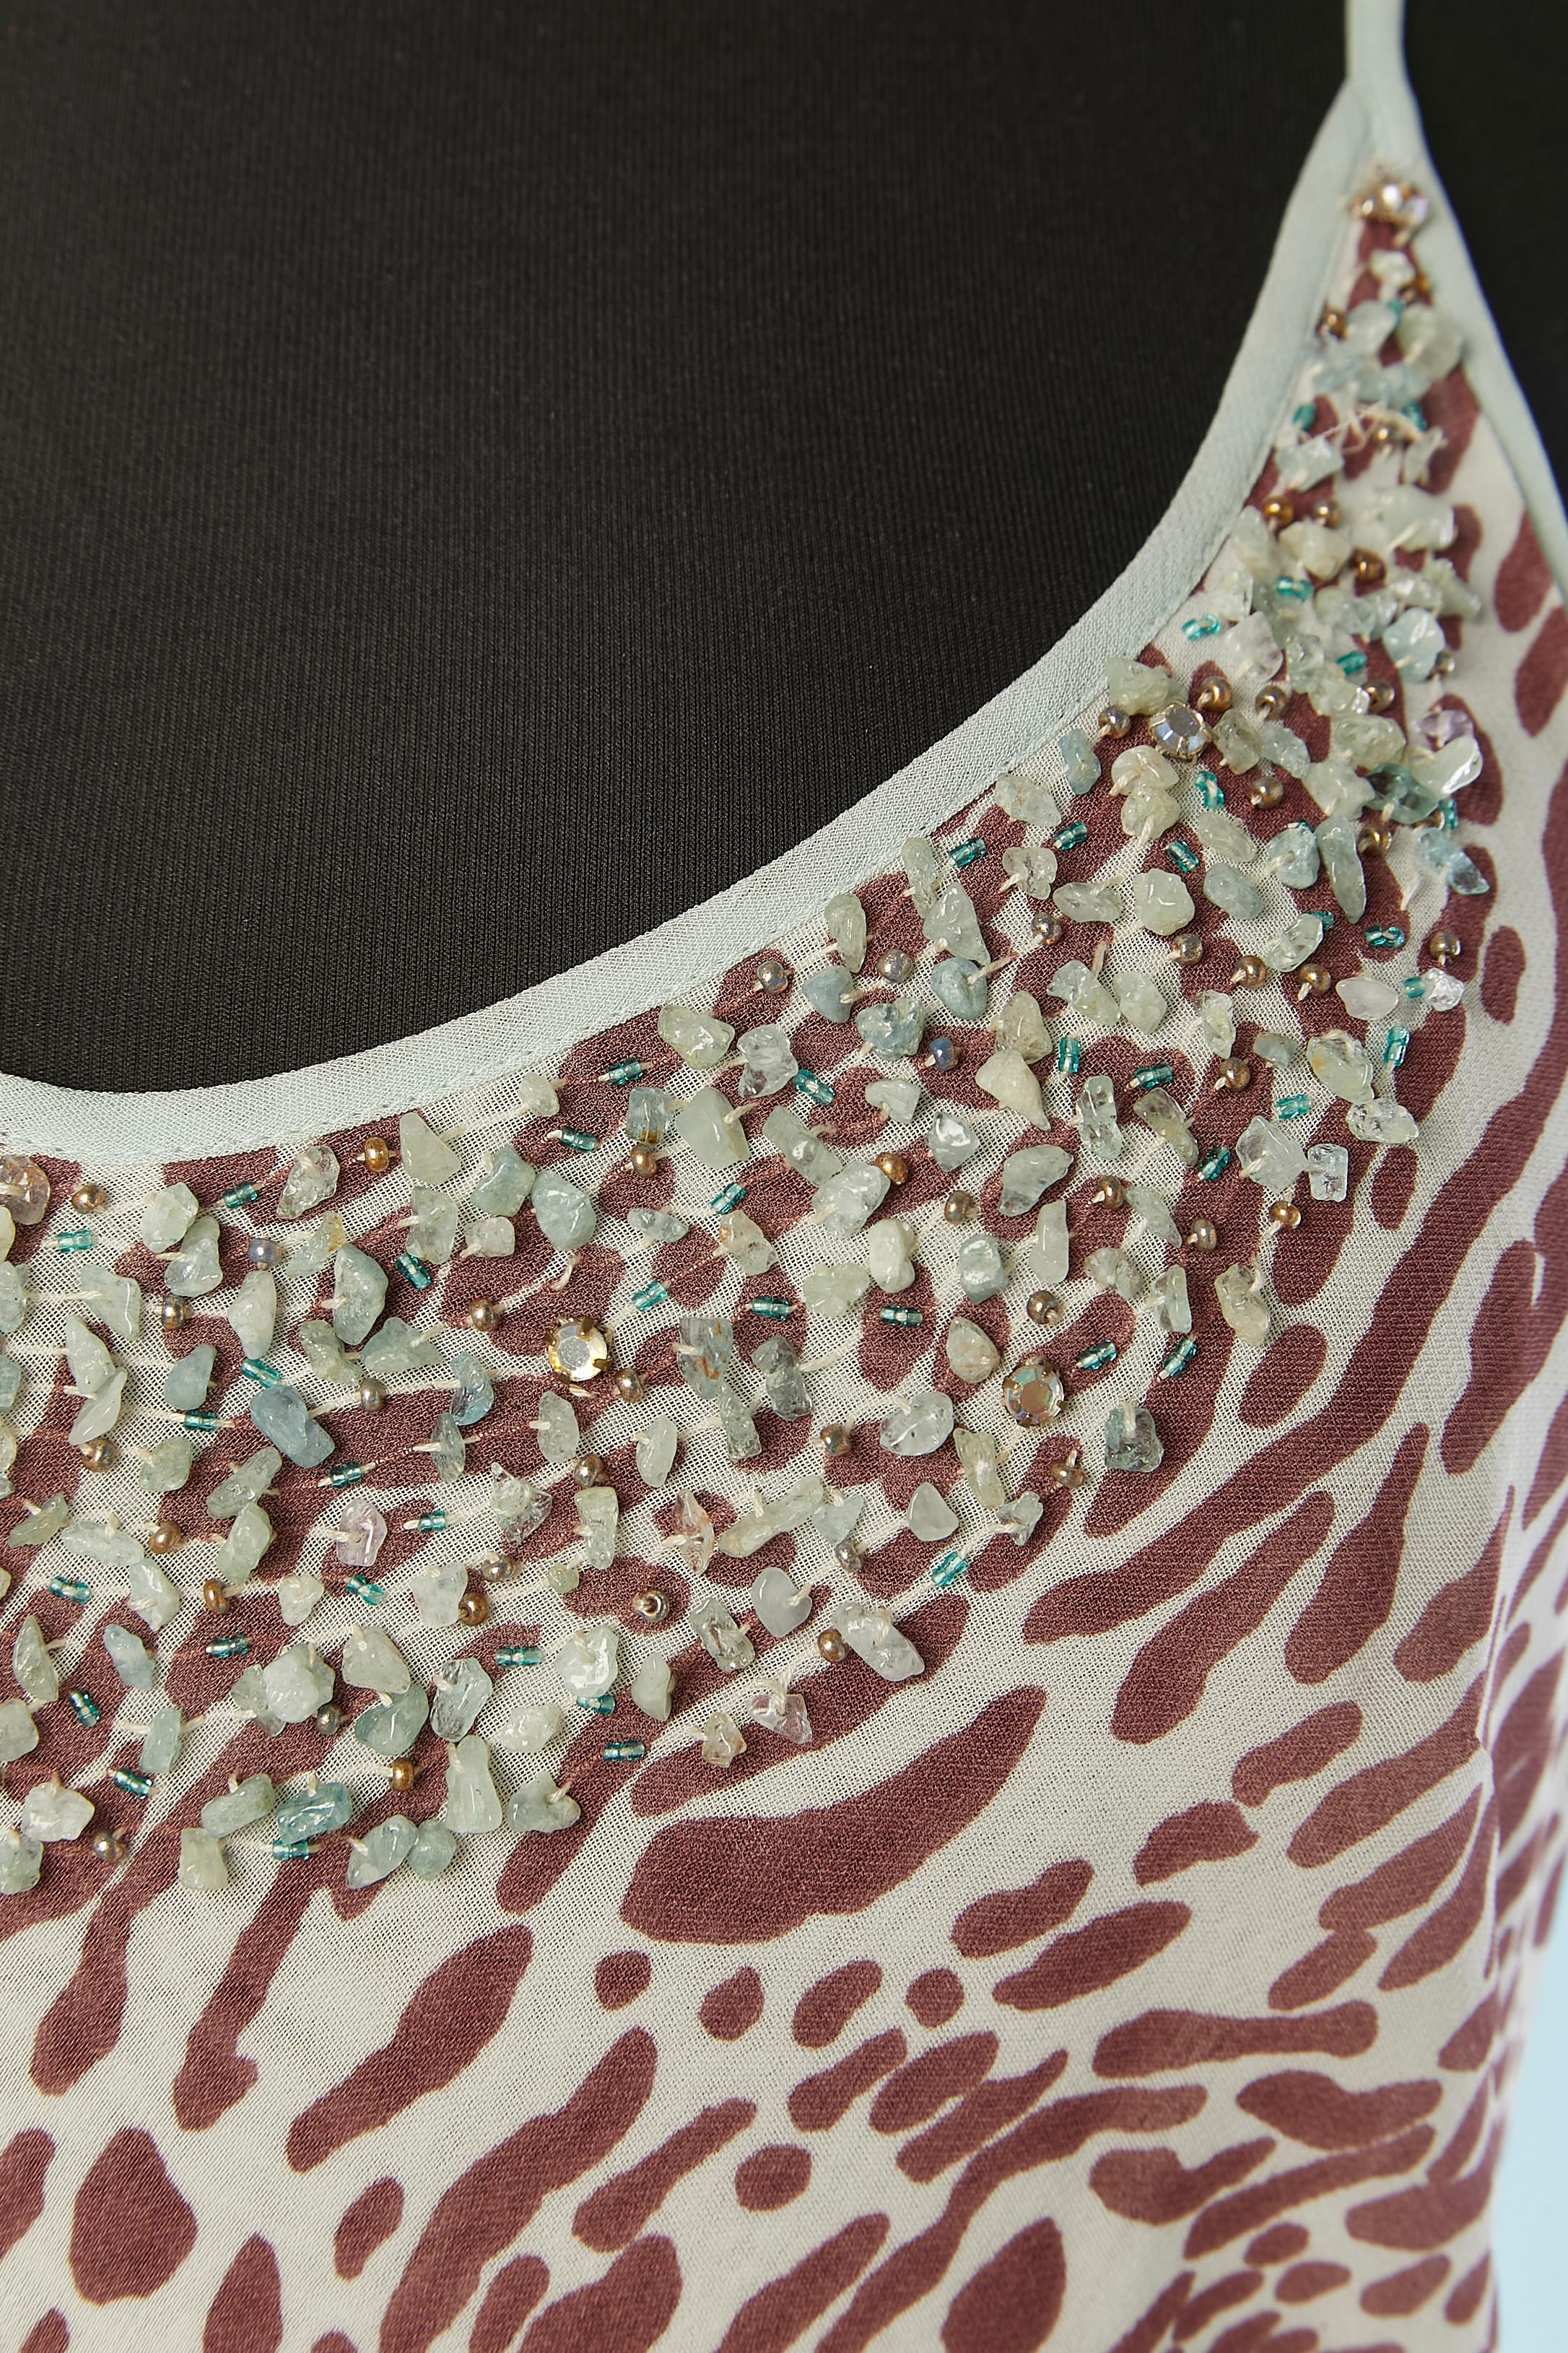 Animal print evening dress with beadwork around the neckline.
Fabric composition: rayon
Biais. Narrow ruffle bottom edge. 
SIZE 44 (It) 40 (Fr) M 